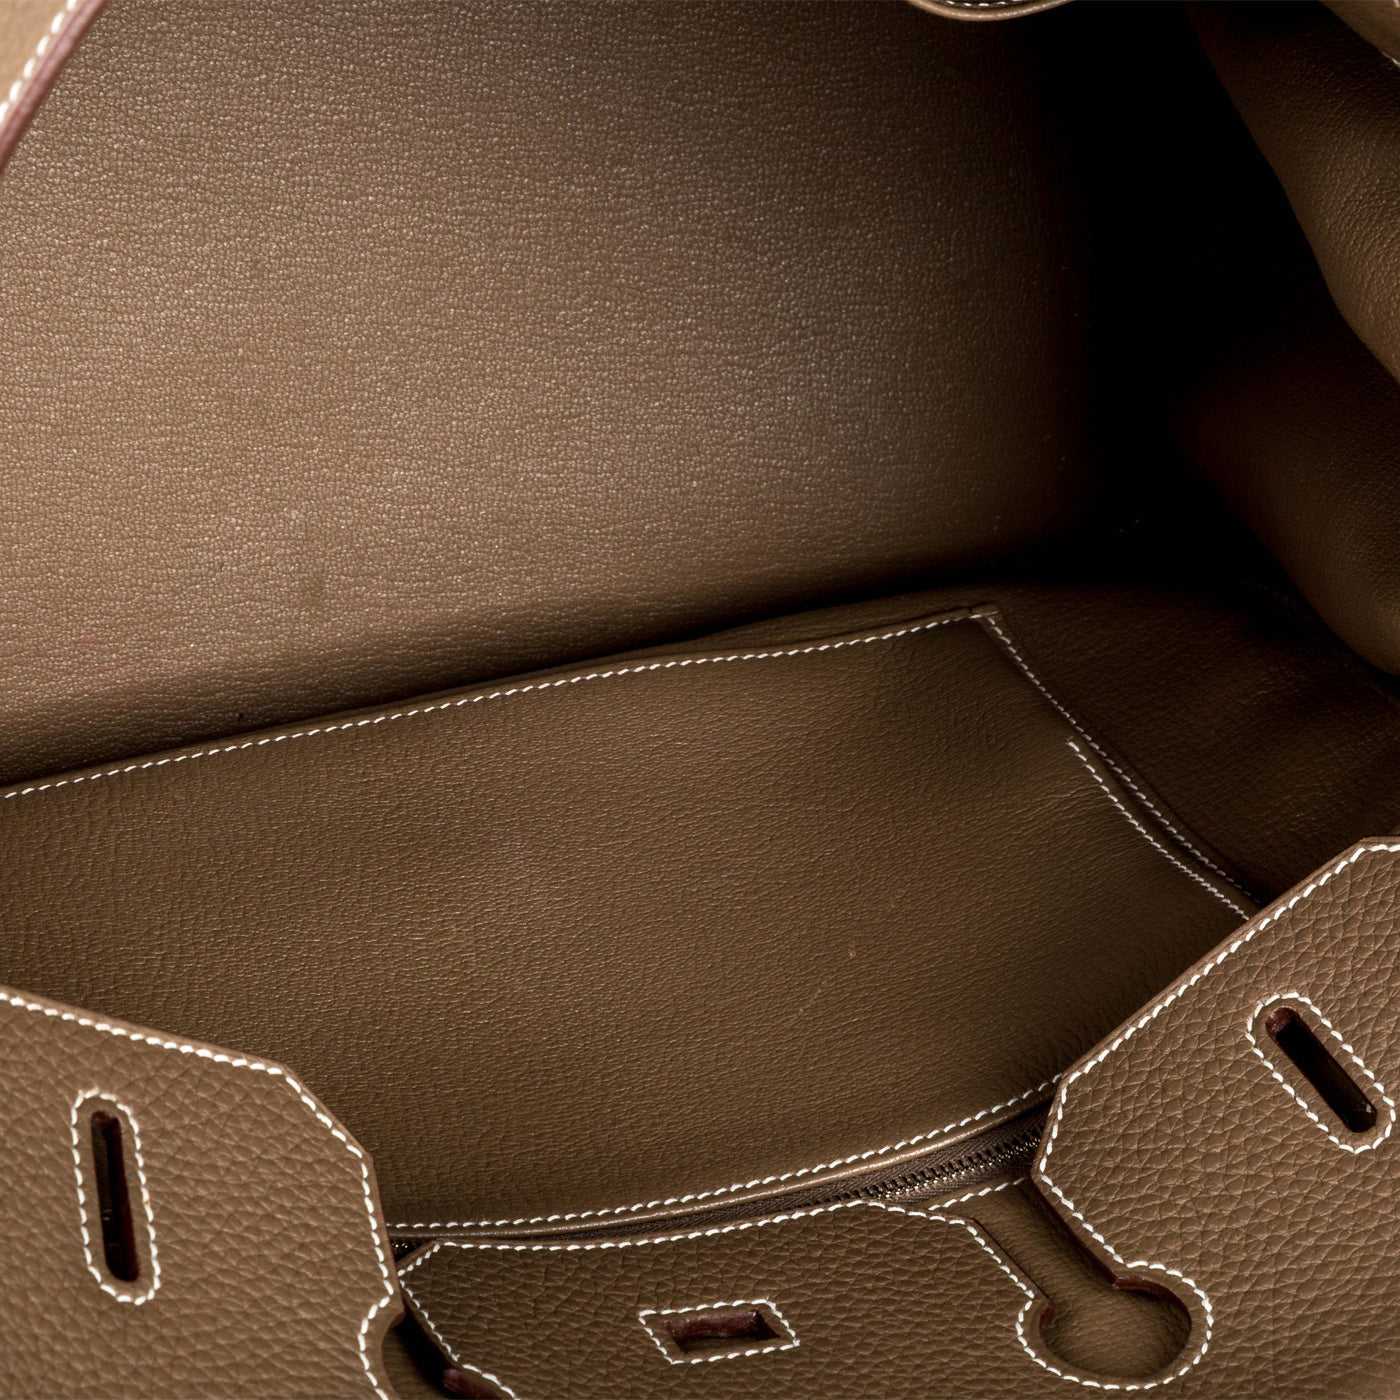 Hermès Birkin 35 cm Handbag in Etoupe Togo Leather